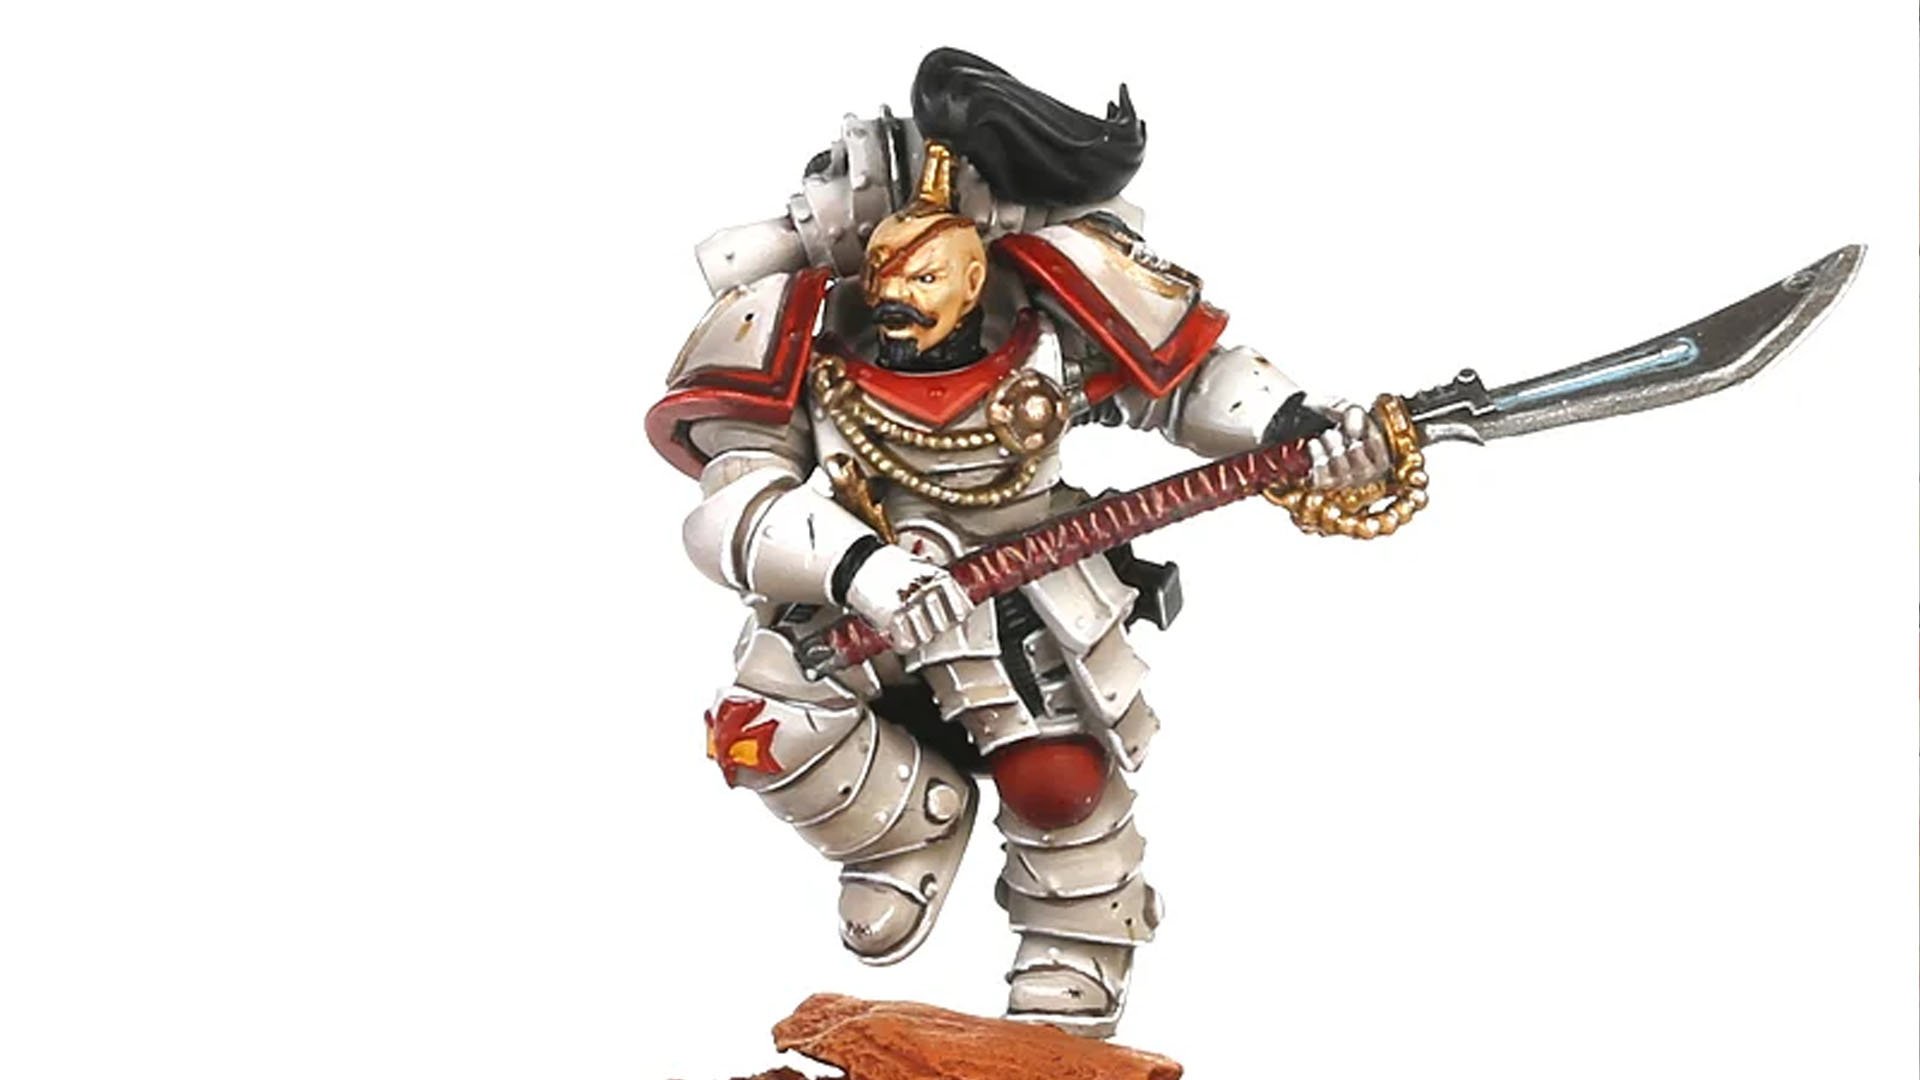 Warhammer 40k Jaghatai Khan guide - Warhammer Community image showing the Horus Heresy White Scars Praetor model